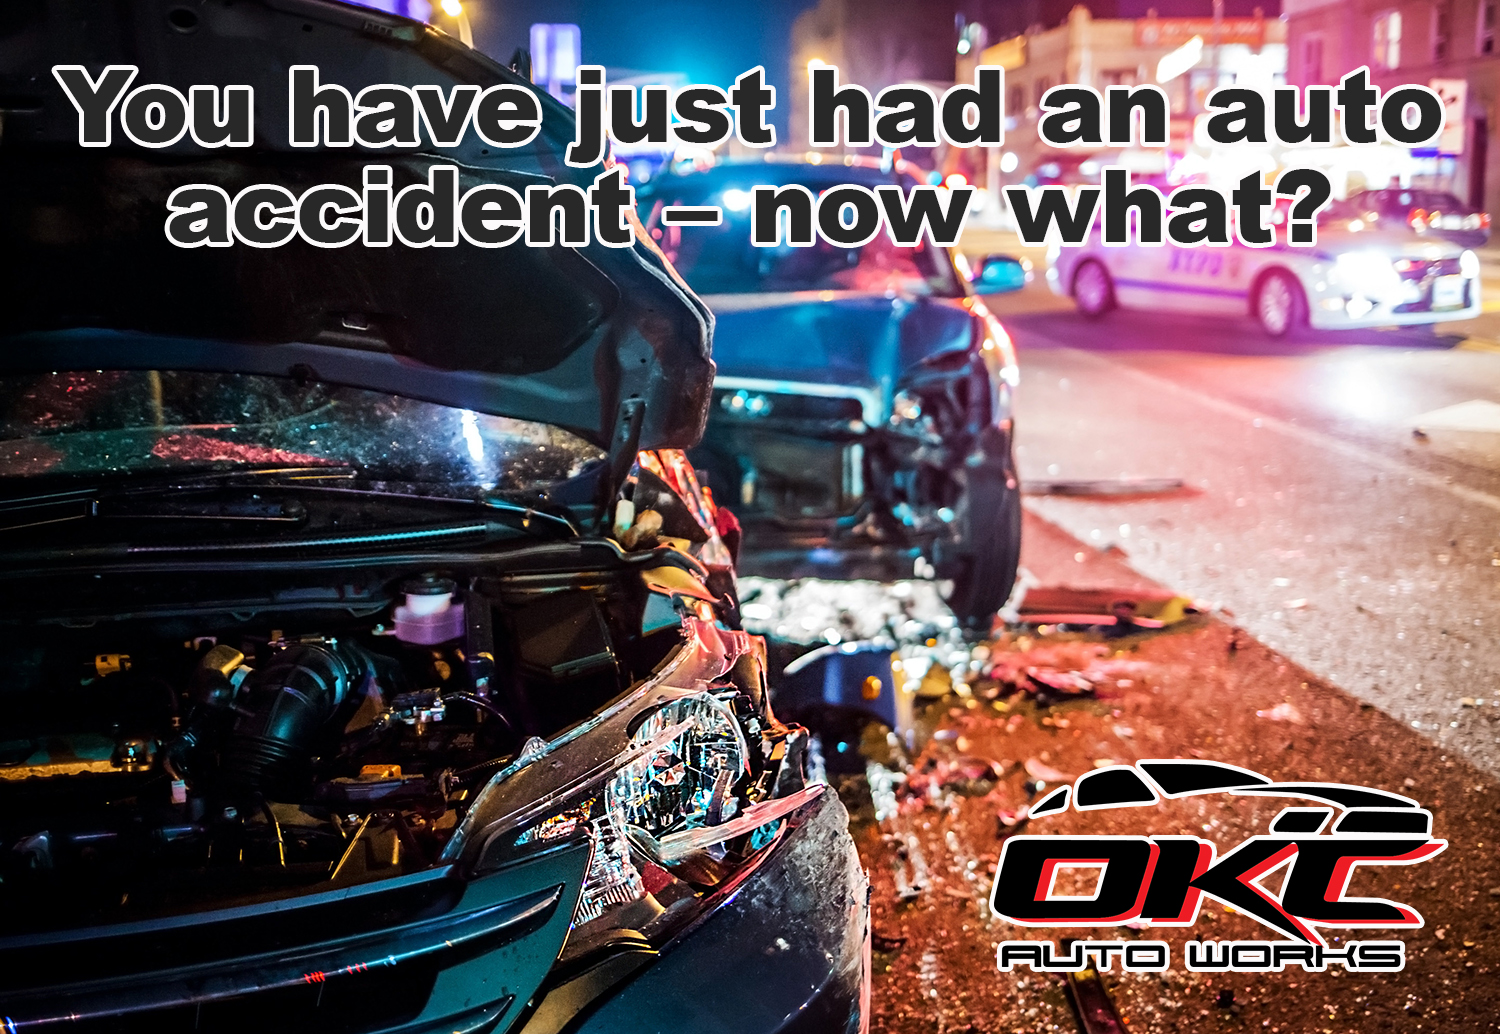 auto accident, had an auto accident